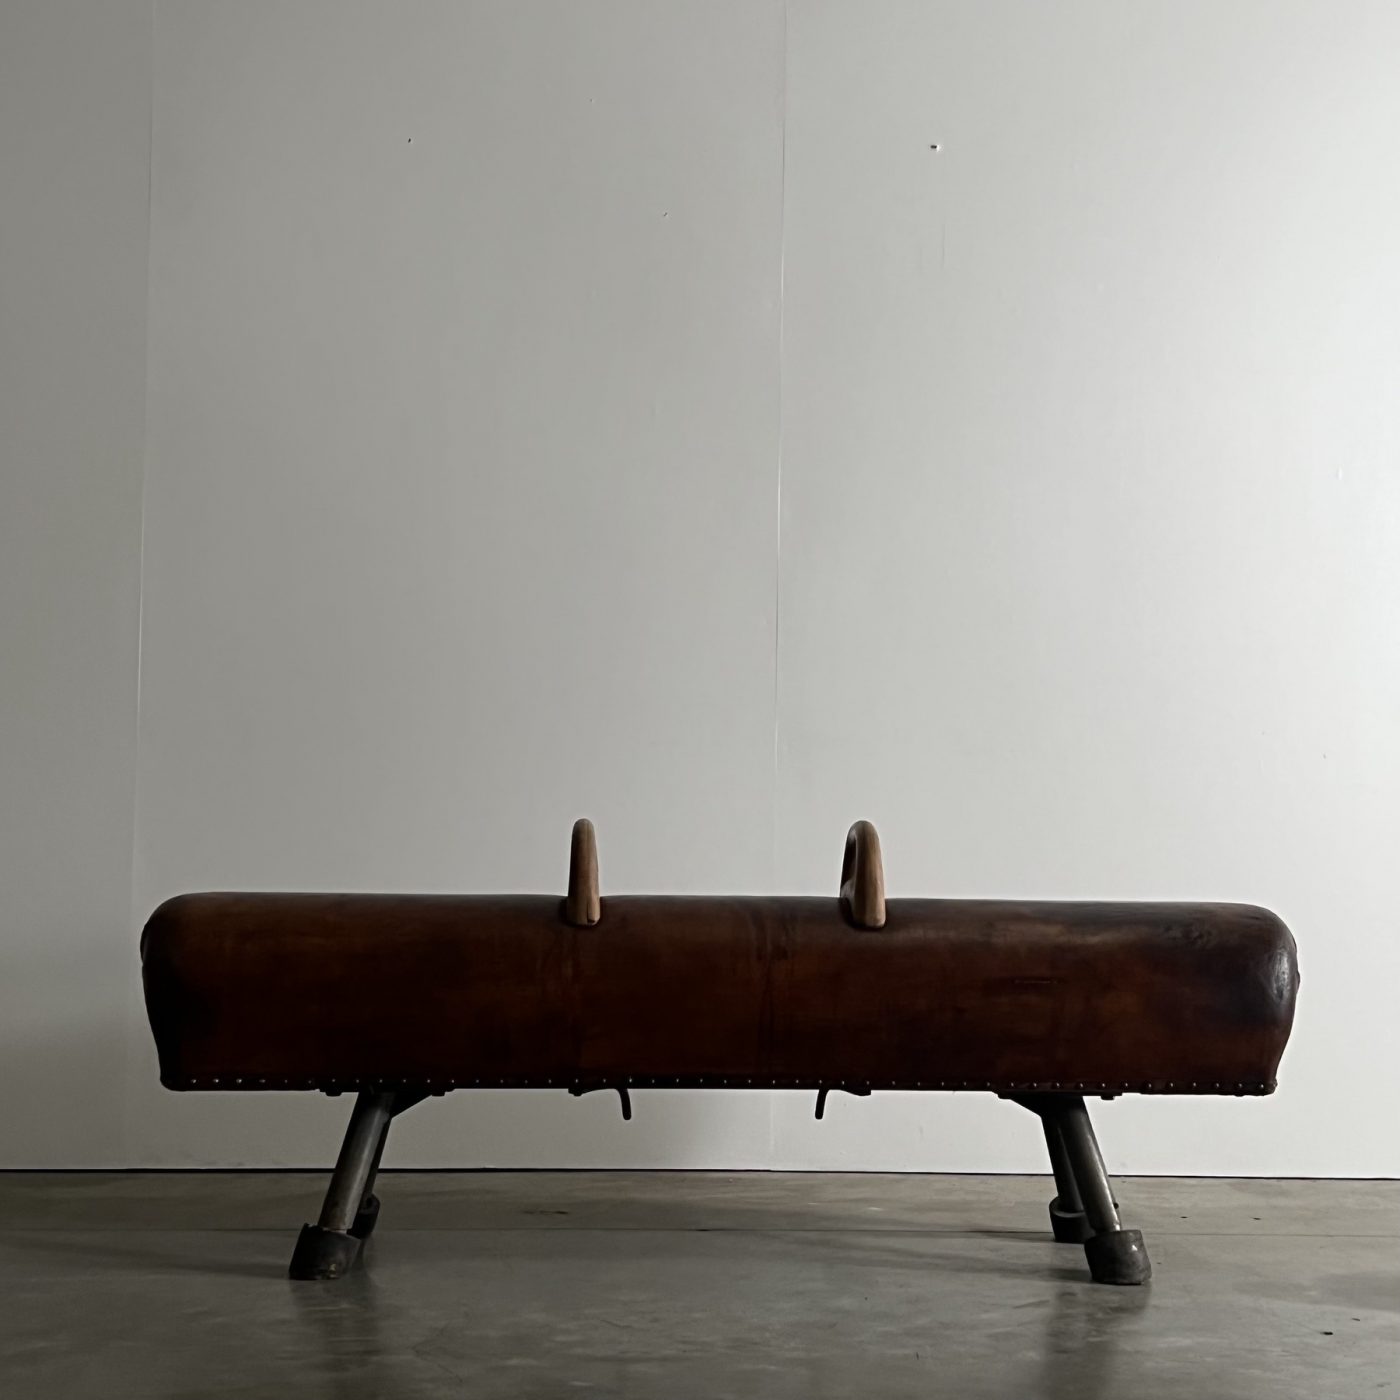 objet-vagabond-leather-bench0000